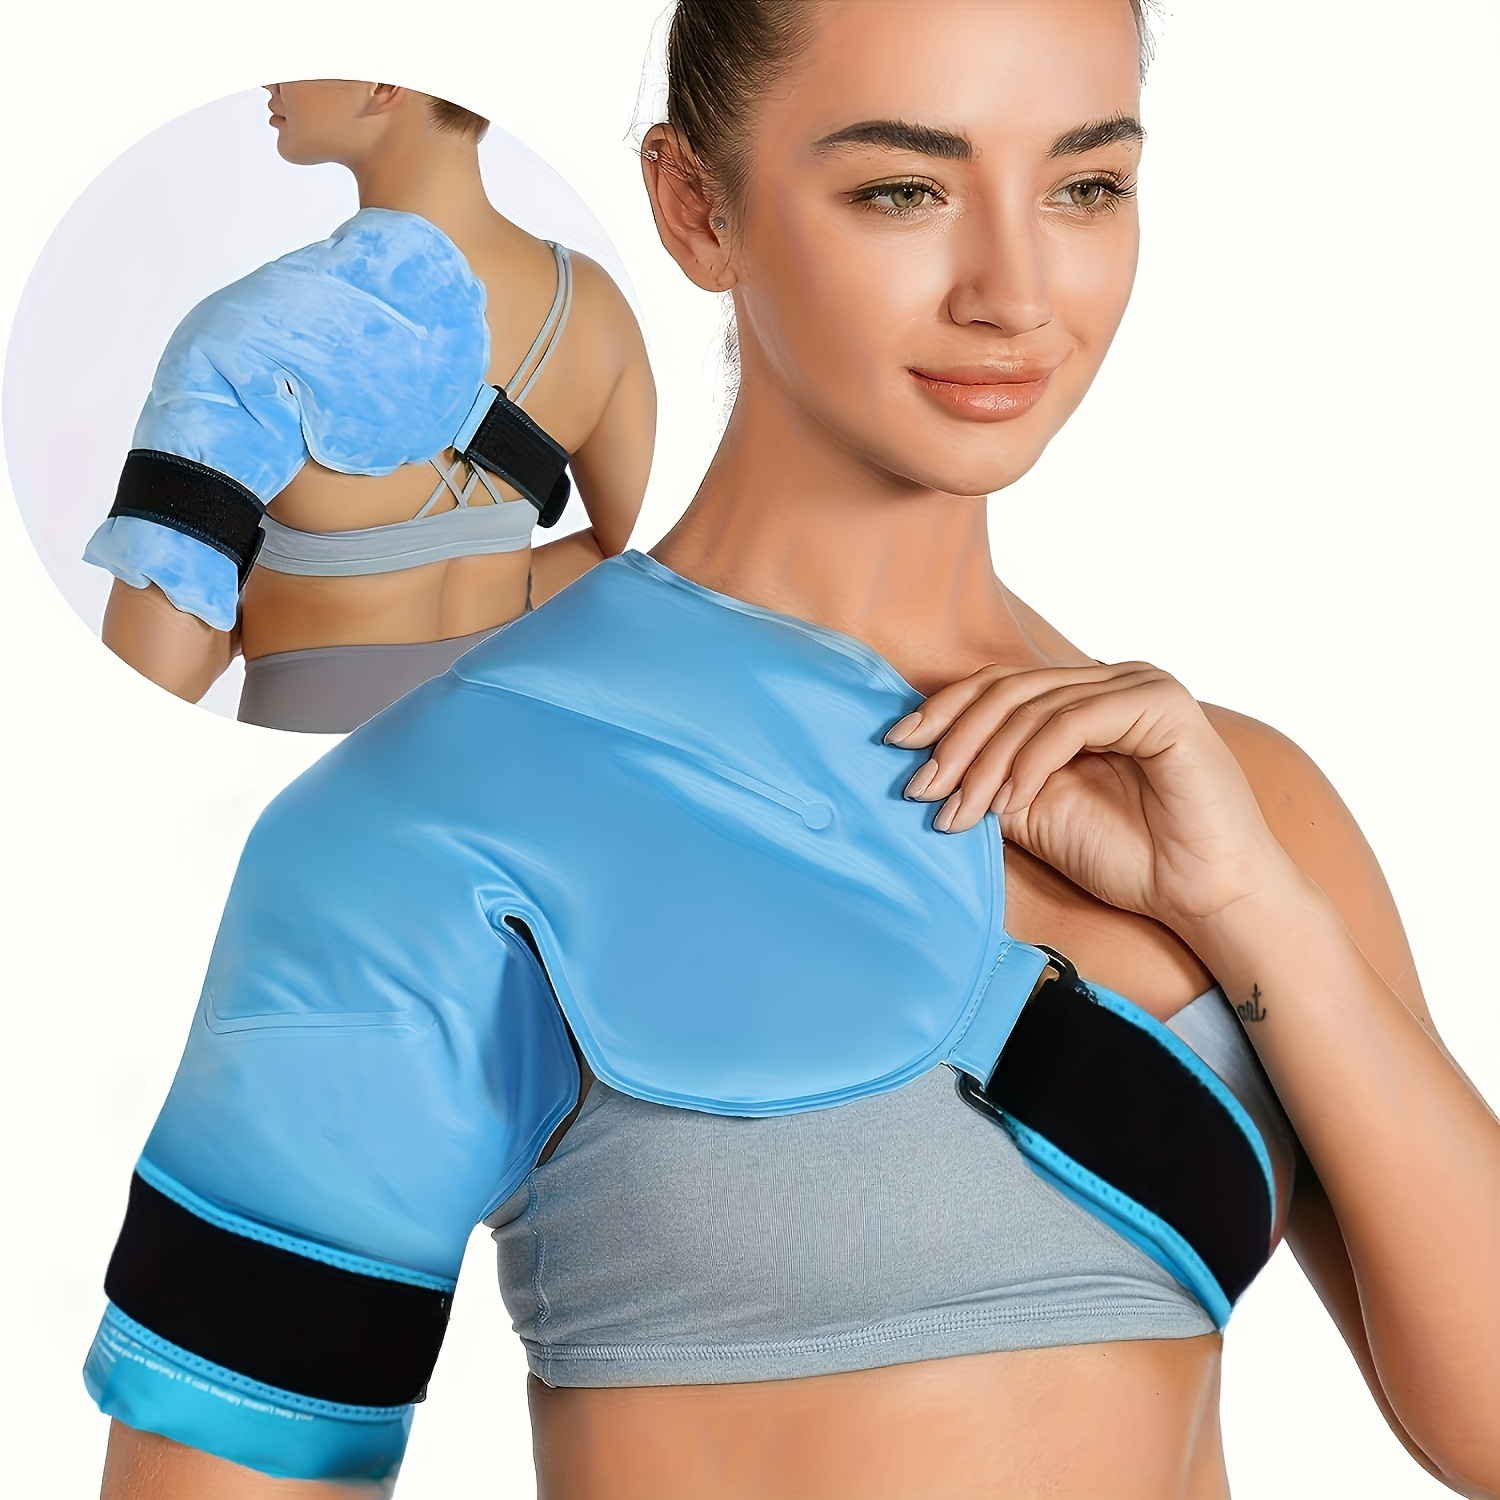 Breathable Neoprene Shoulder Brace Unisex Design For Injuries